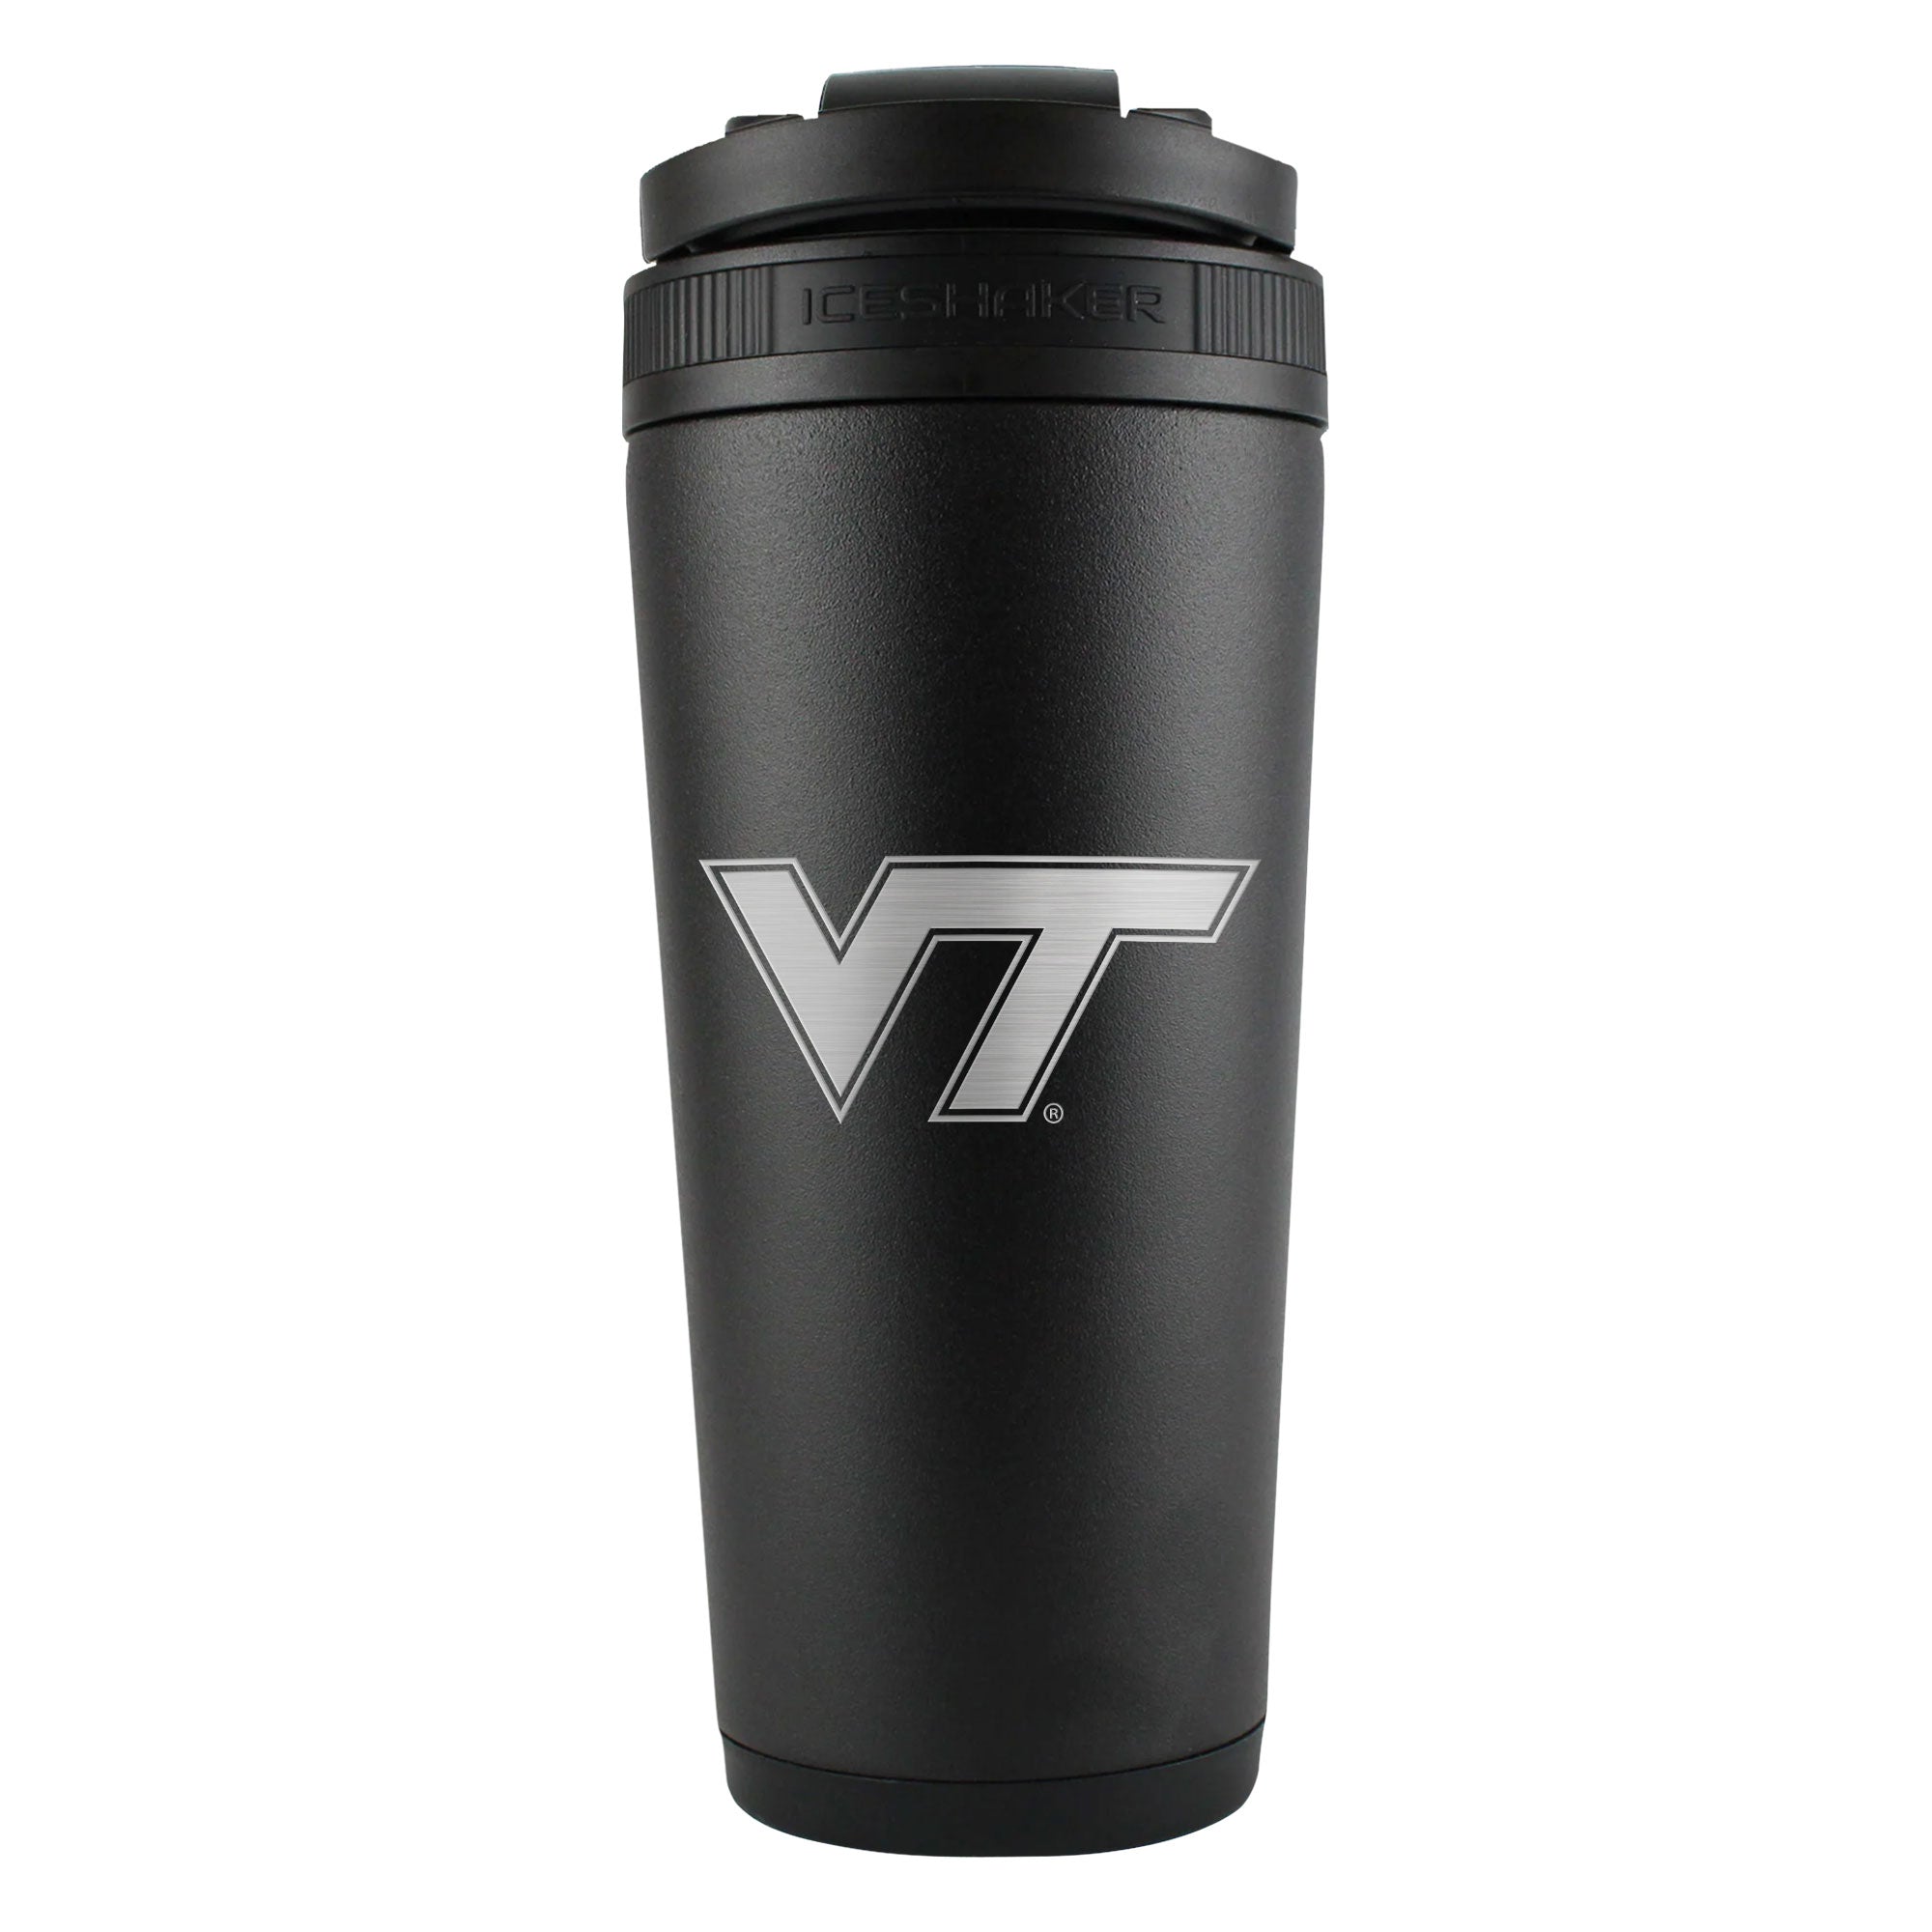 Officially Licensed Virginia Tech 26oz Ice Shaker - Black